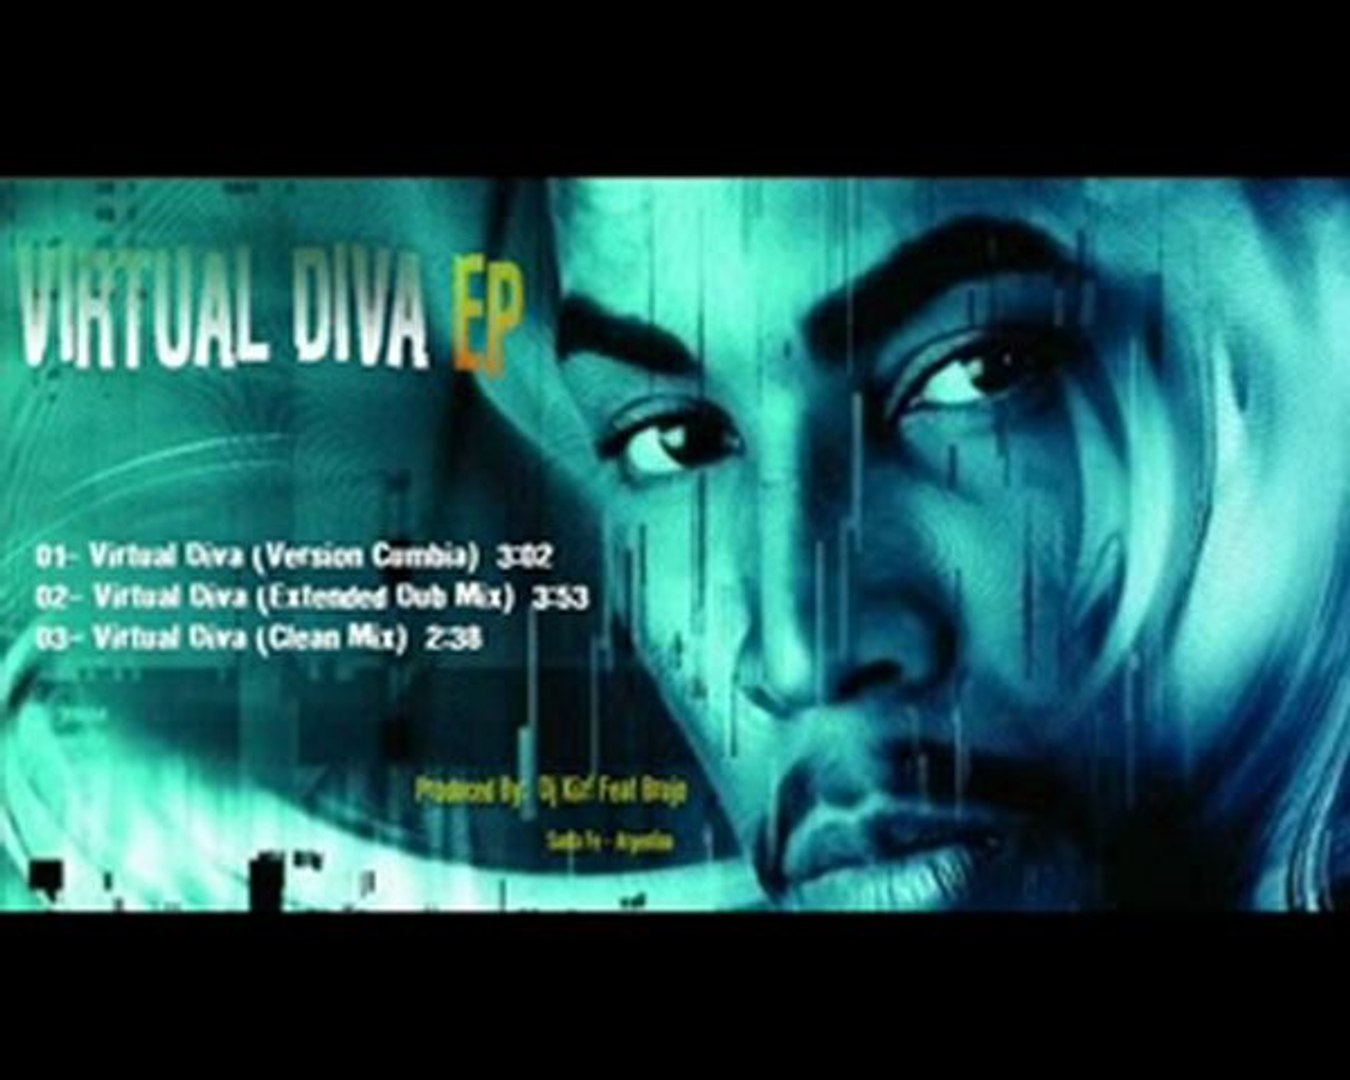 Dj Kiz! Feat Brujo - Virtual Diva (Version Cumbia) Dailymotion